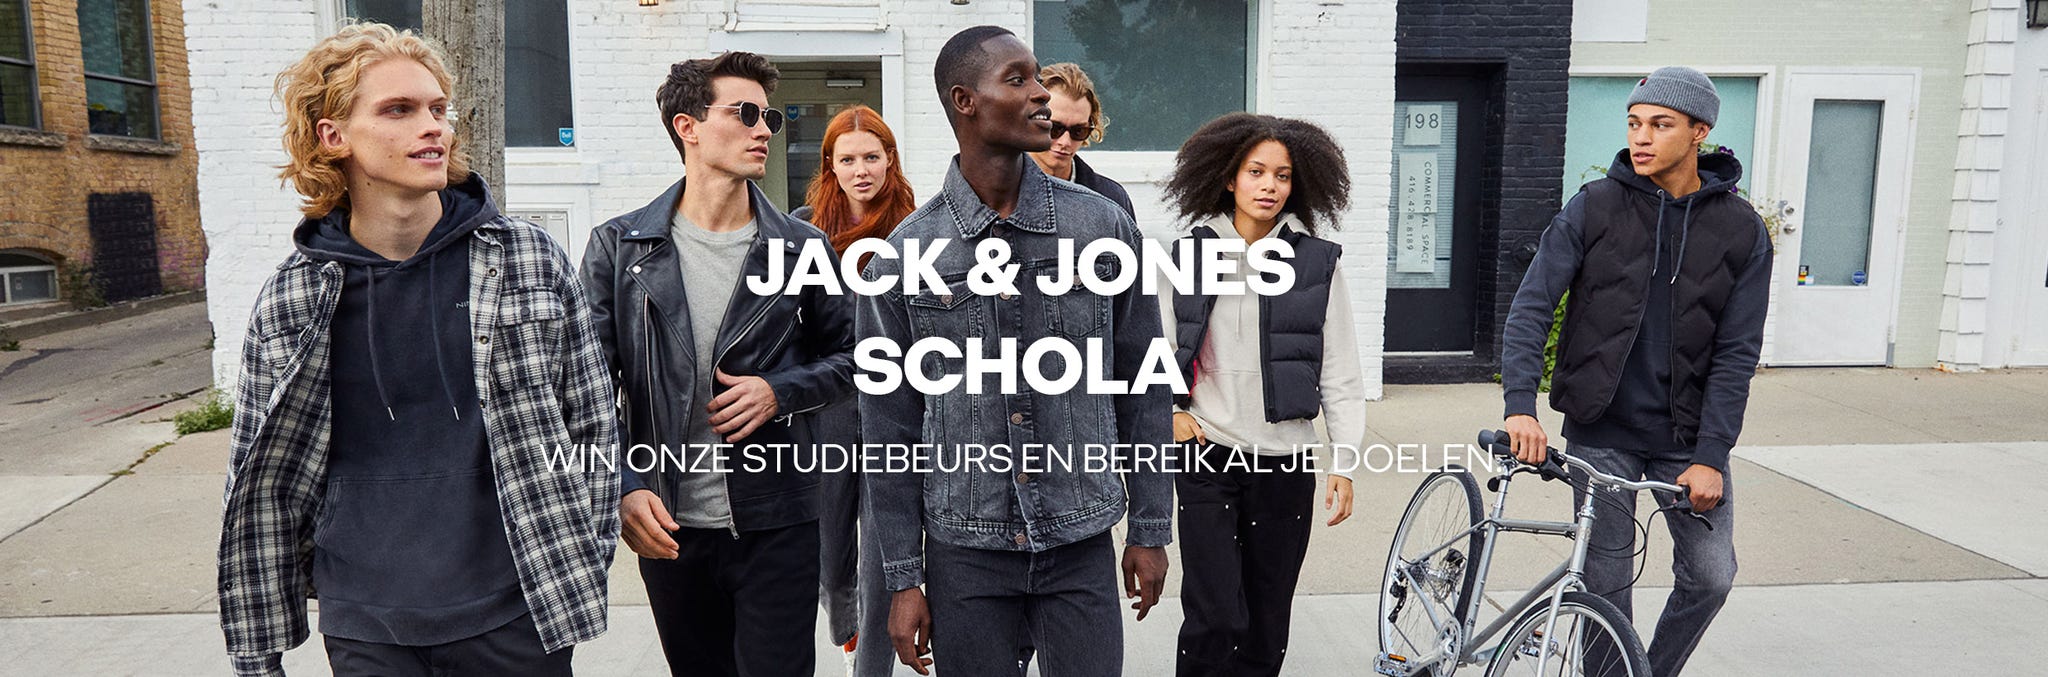 scholarship-row3-box1-nl-nl.jpg